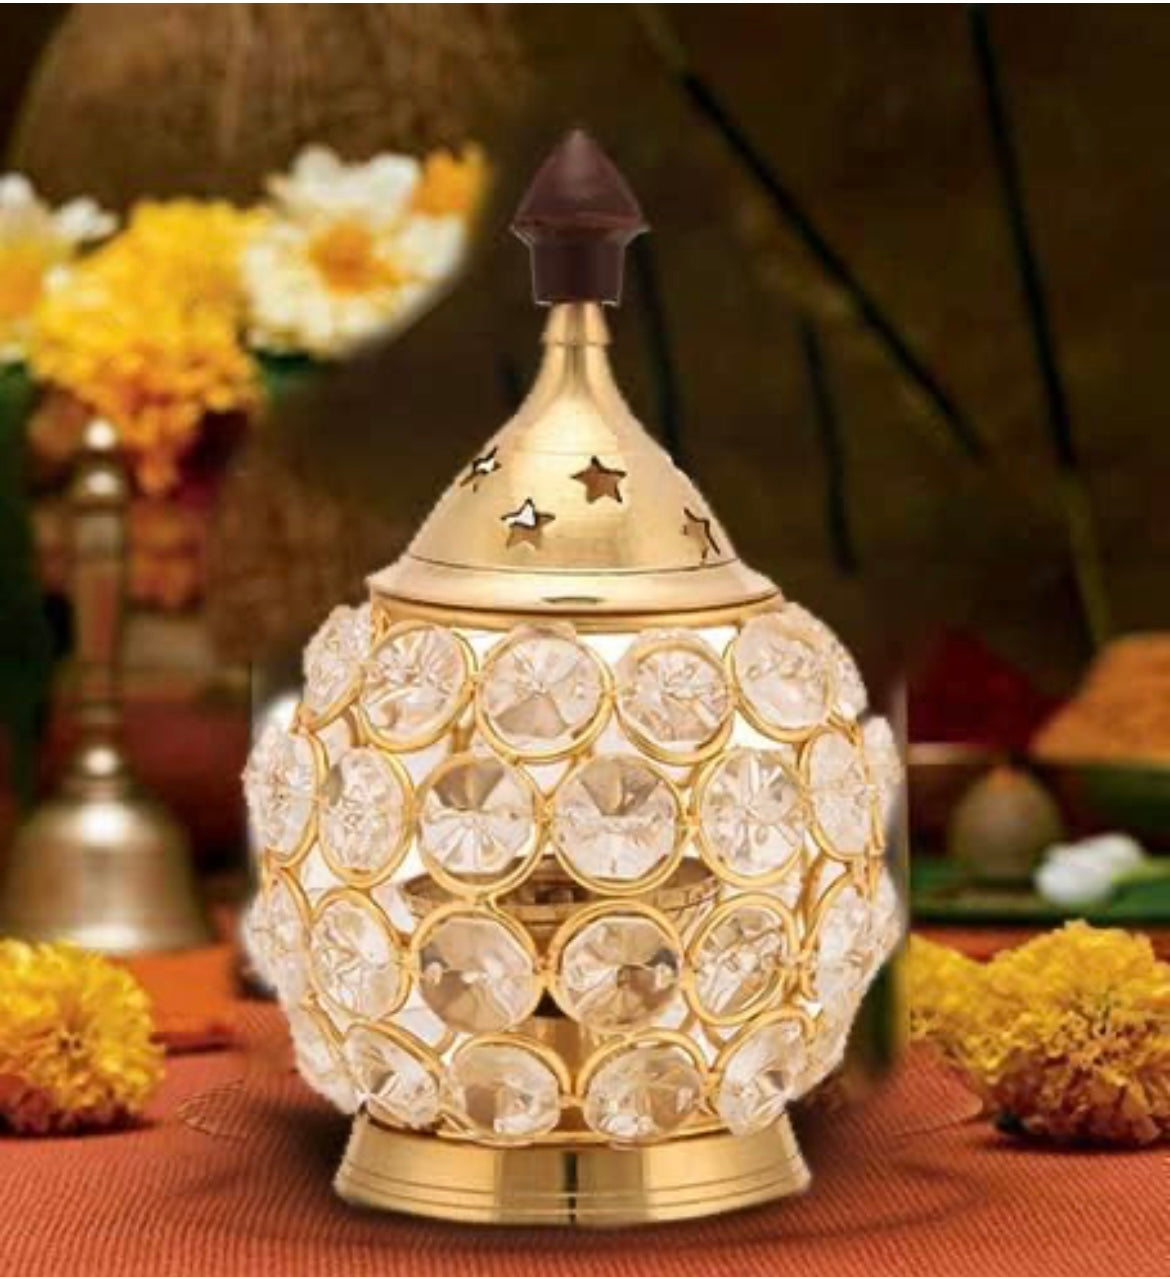 Collectible India Brass Akhand Diya for Puja | Diwali Diyas Crystal Oil Lamp , Decorative Diwali Decoration Items - Deepawali Gift for Family & Friends